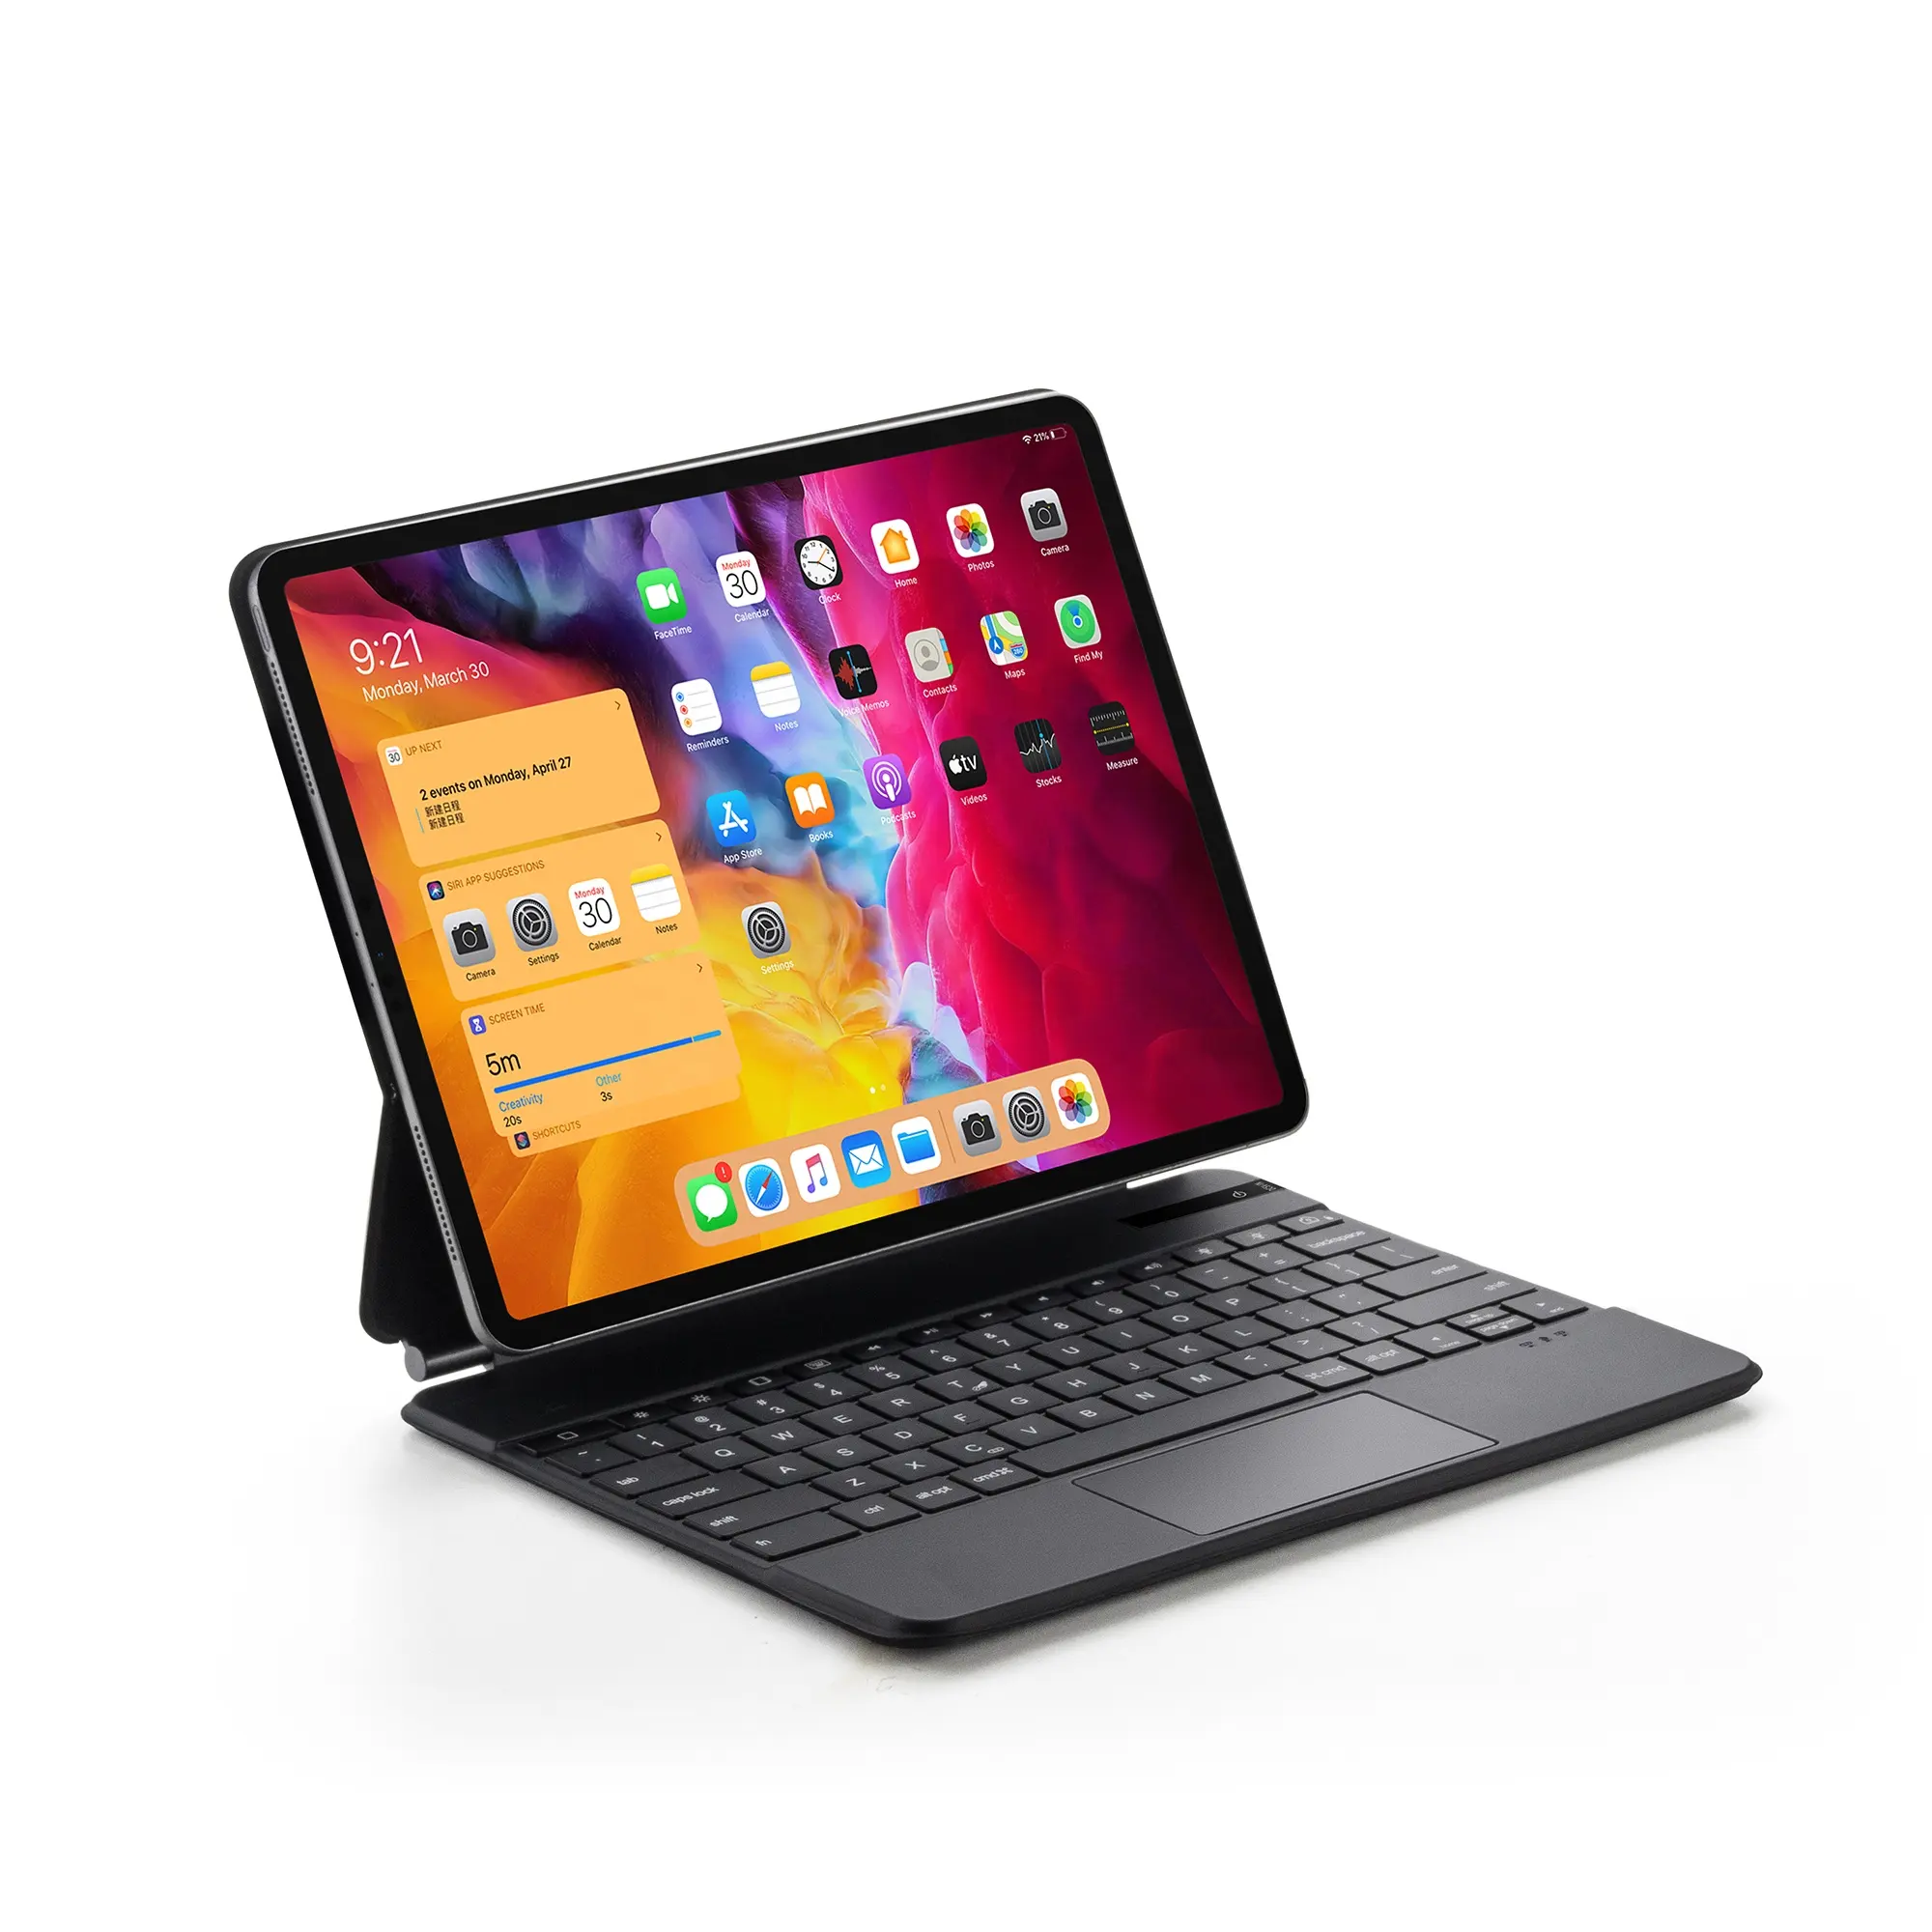 Tastiera Touchpad senza fili tastiera magica per iPad Pro 12.9 pollici Tablet con tastiera